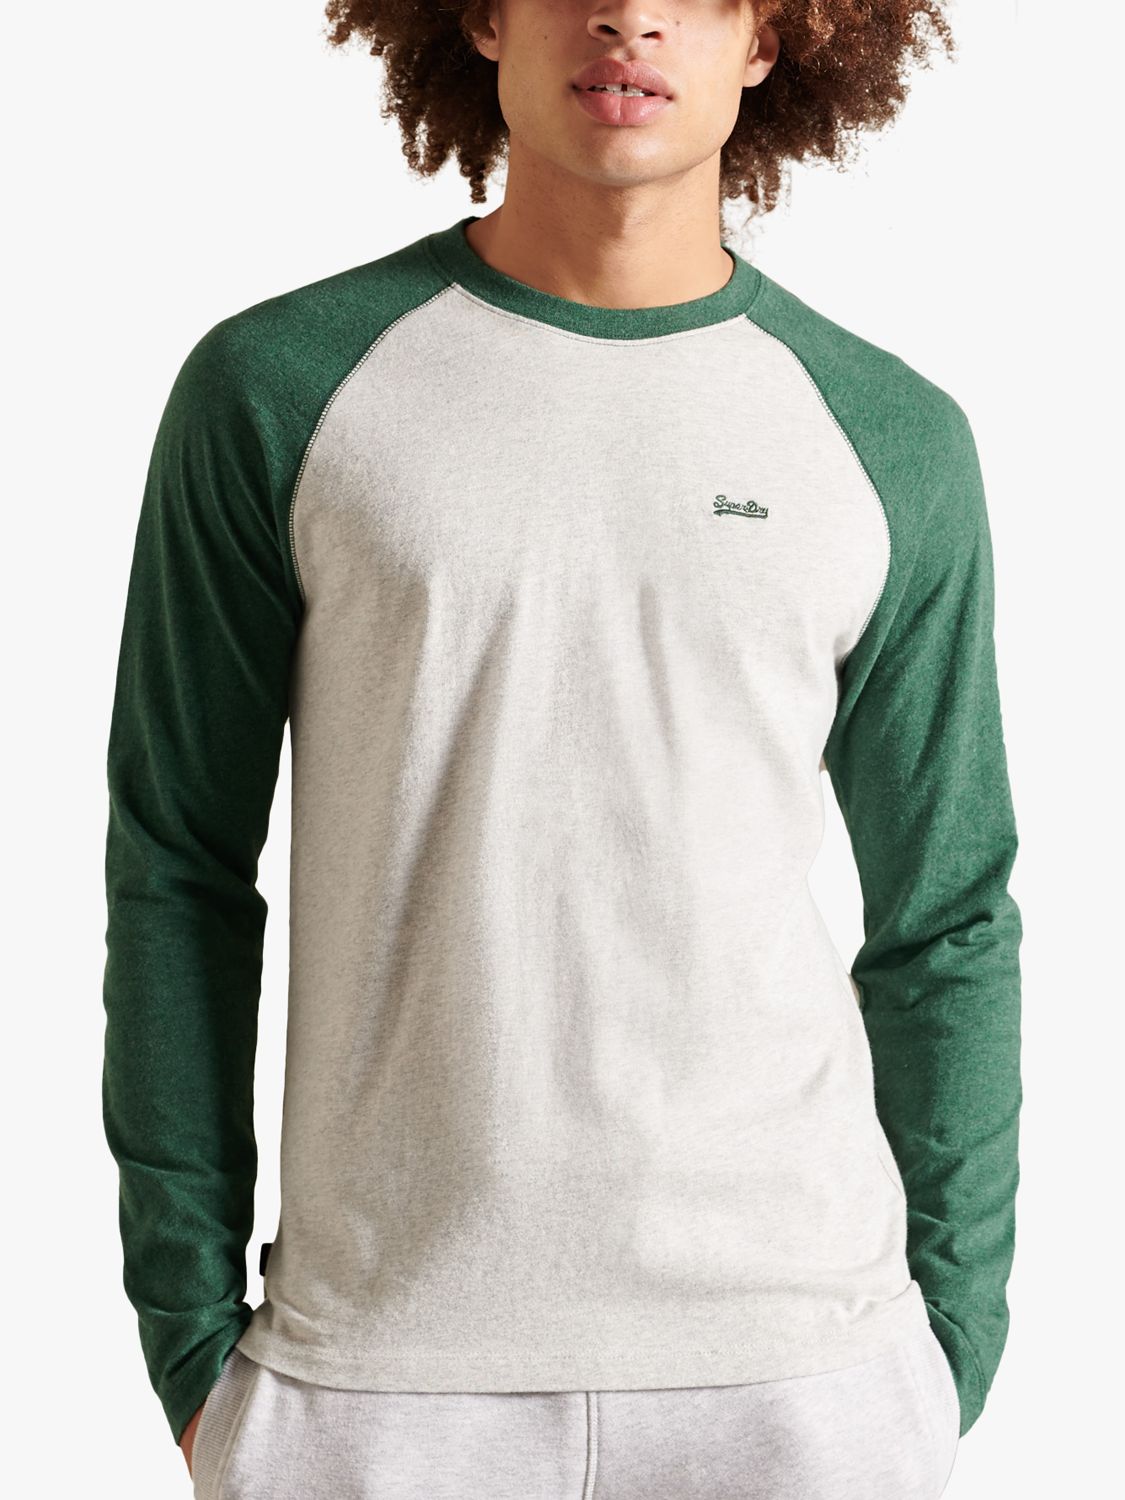 Superdry Organic Cotton Slim Fit Baseball T-Shirt, Glacier/Pine Green, S